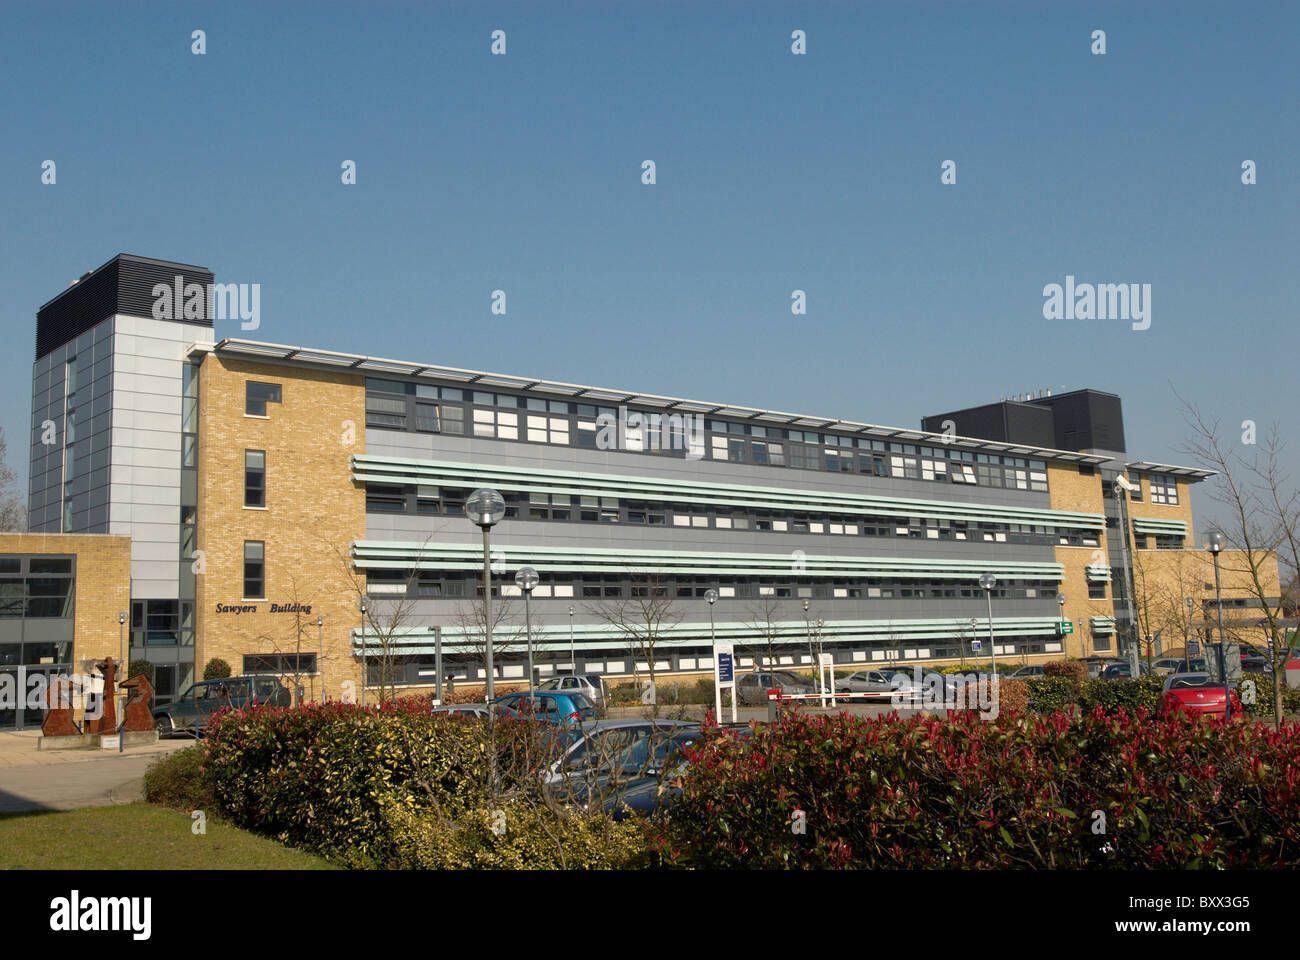 Anglia Ruskin University building Chelmsford Essex UK Stock Photo